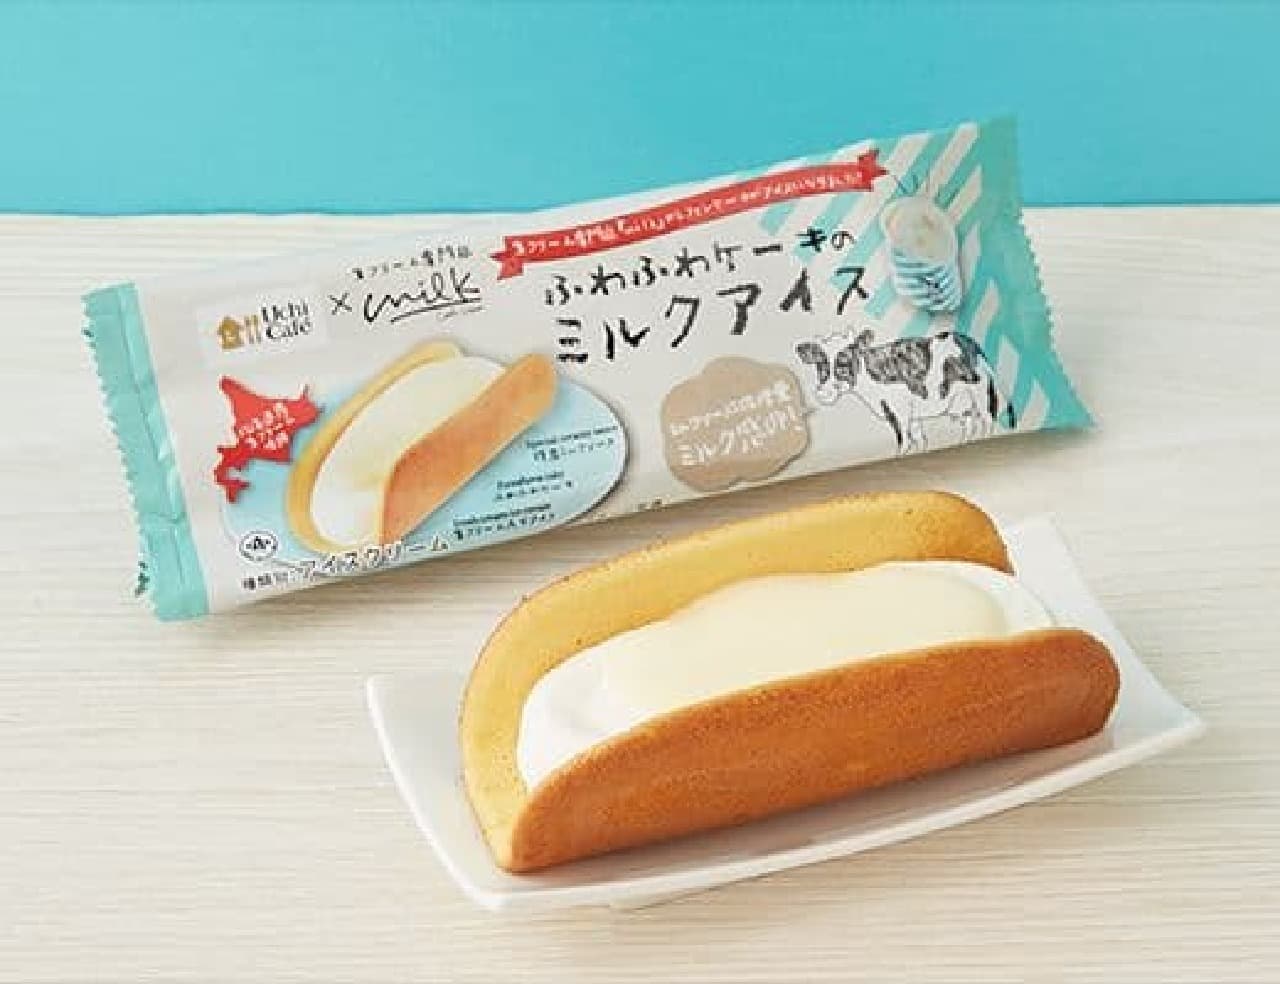 Lawson "uchi cafe milk supervision fluffy cake milk ice cream 74ml"